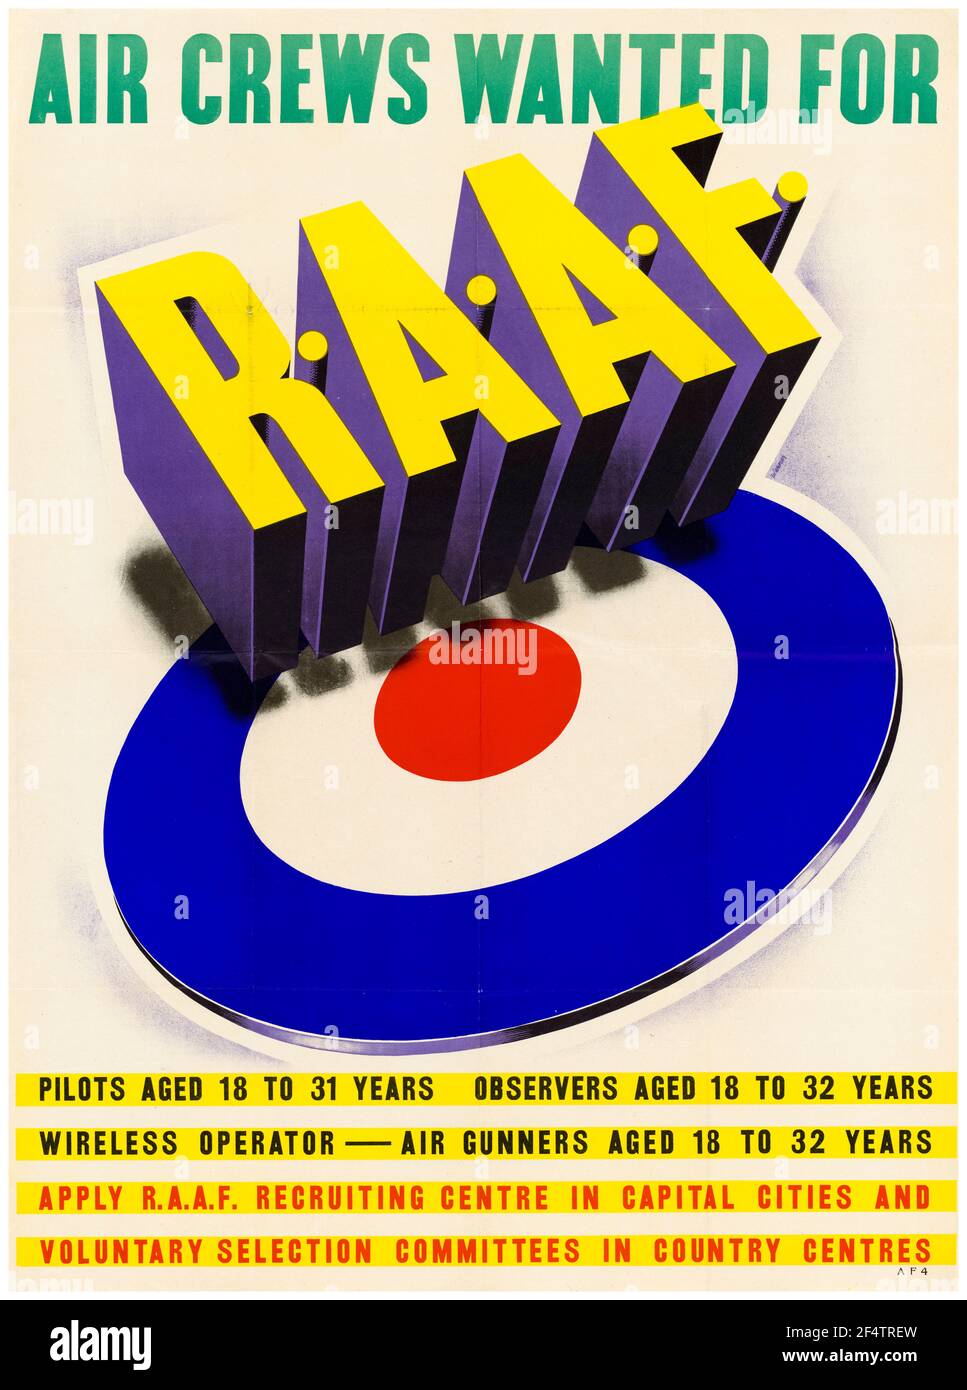 Australier, WW2 Forces Recruitment Poster: Luftbesatzungen gesucht für RAAF (Royal Australian Air Force), 1942-1945 Stockfoto